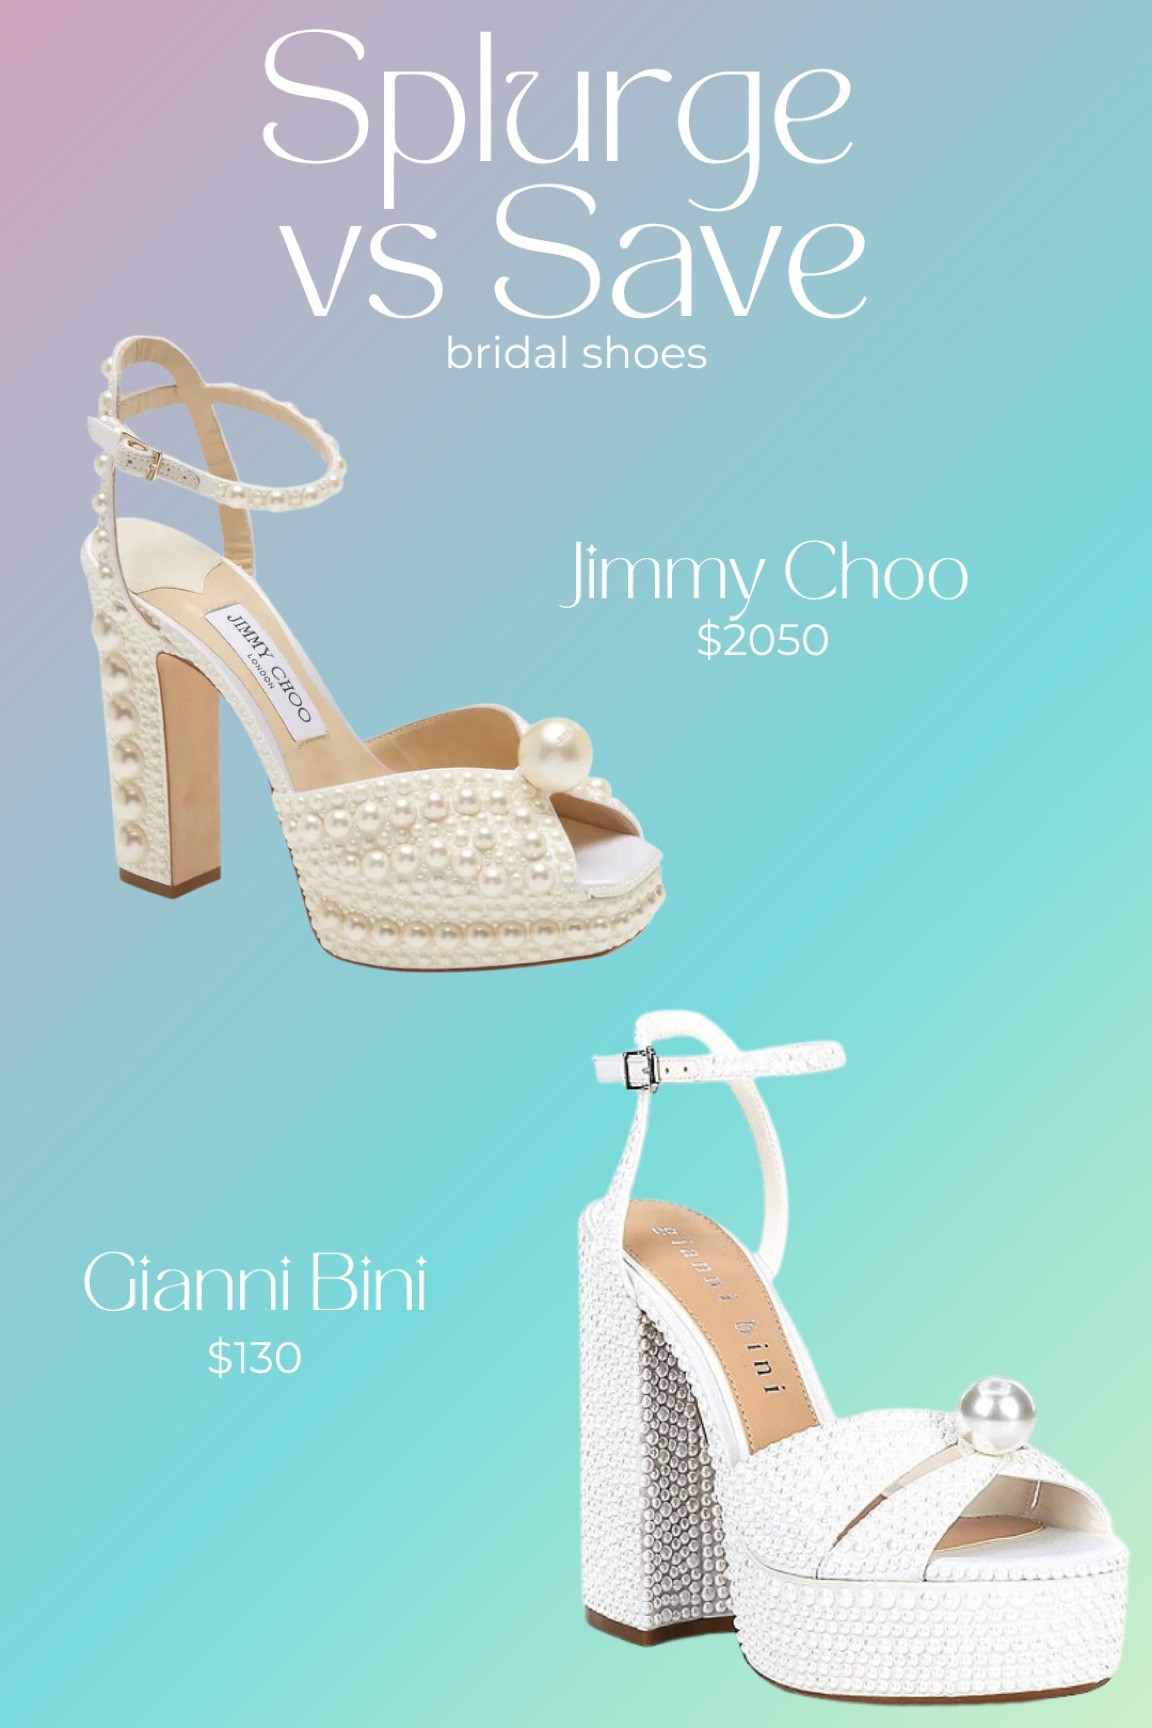 Jimmy Choo Wedding Shoes: Wedding Shoes to Splurge On